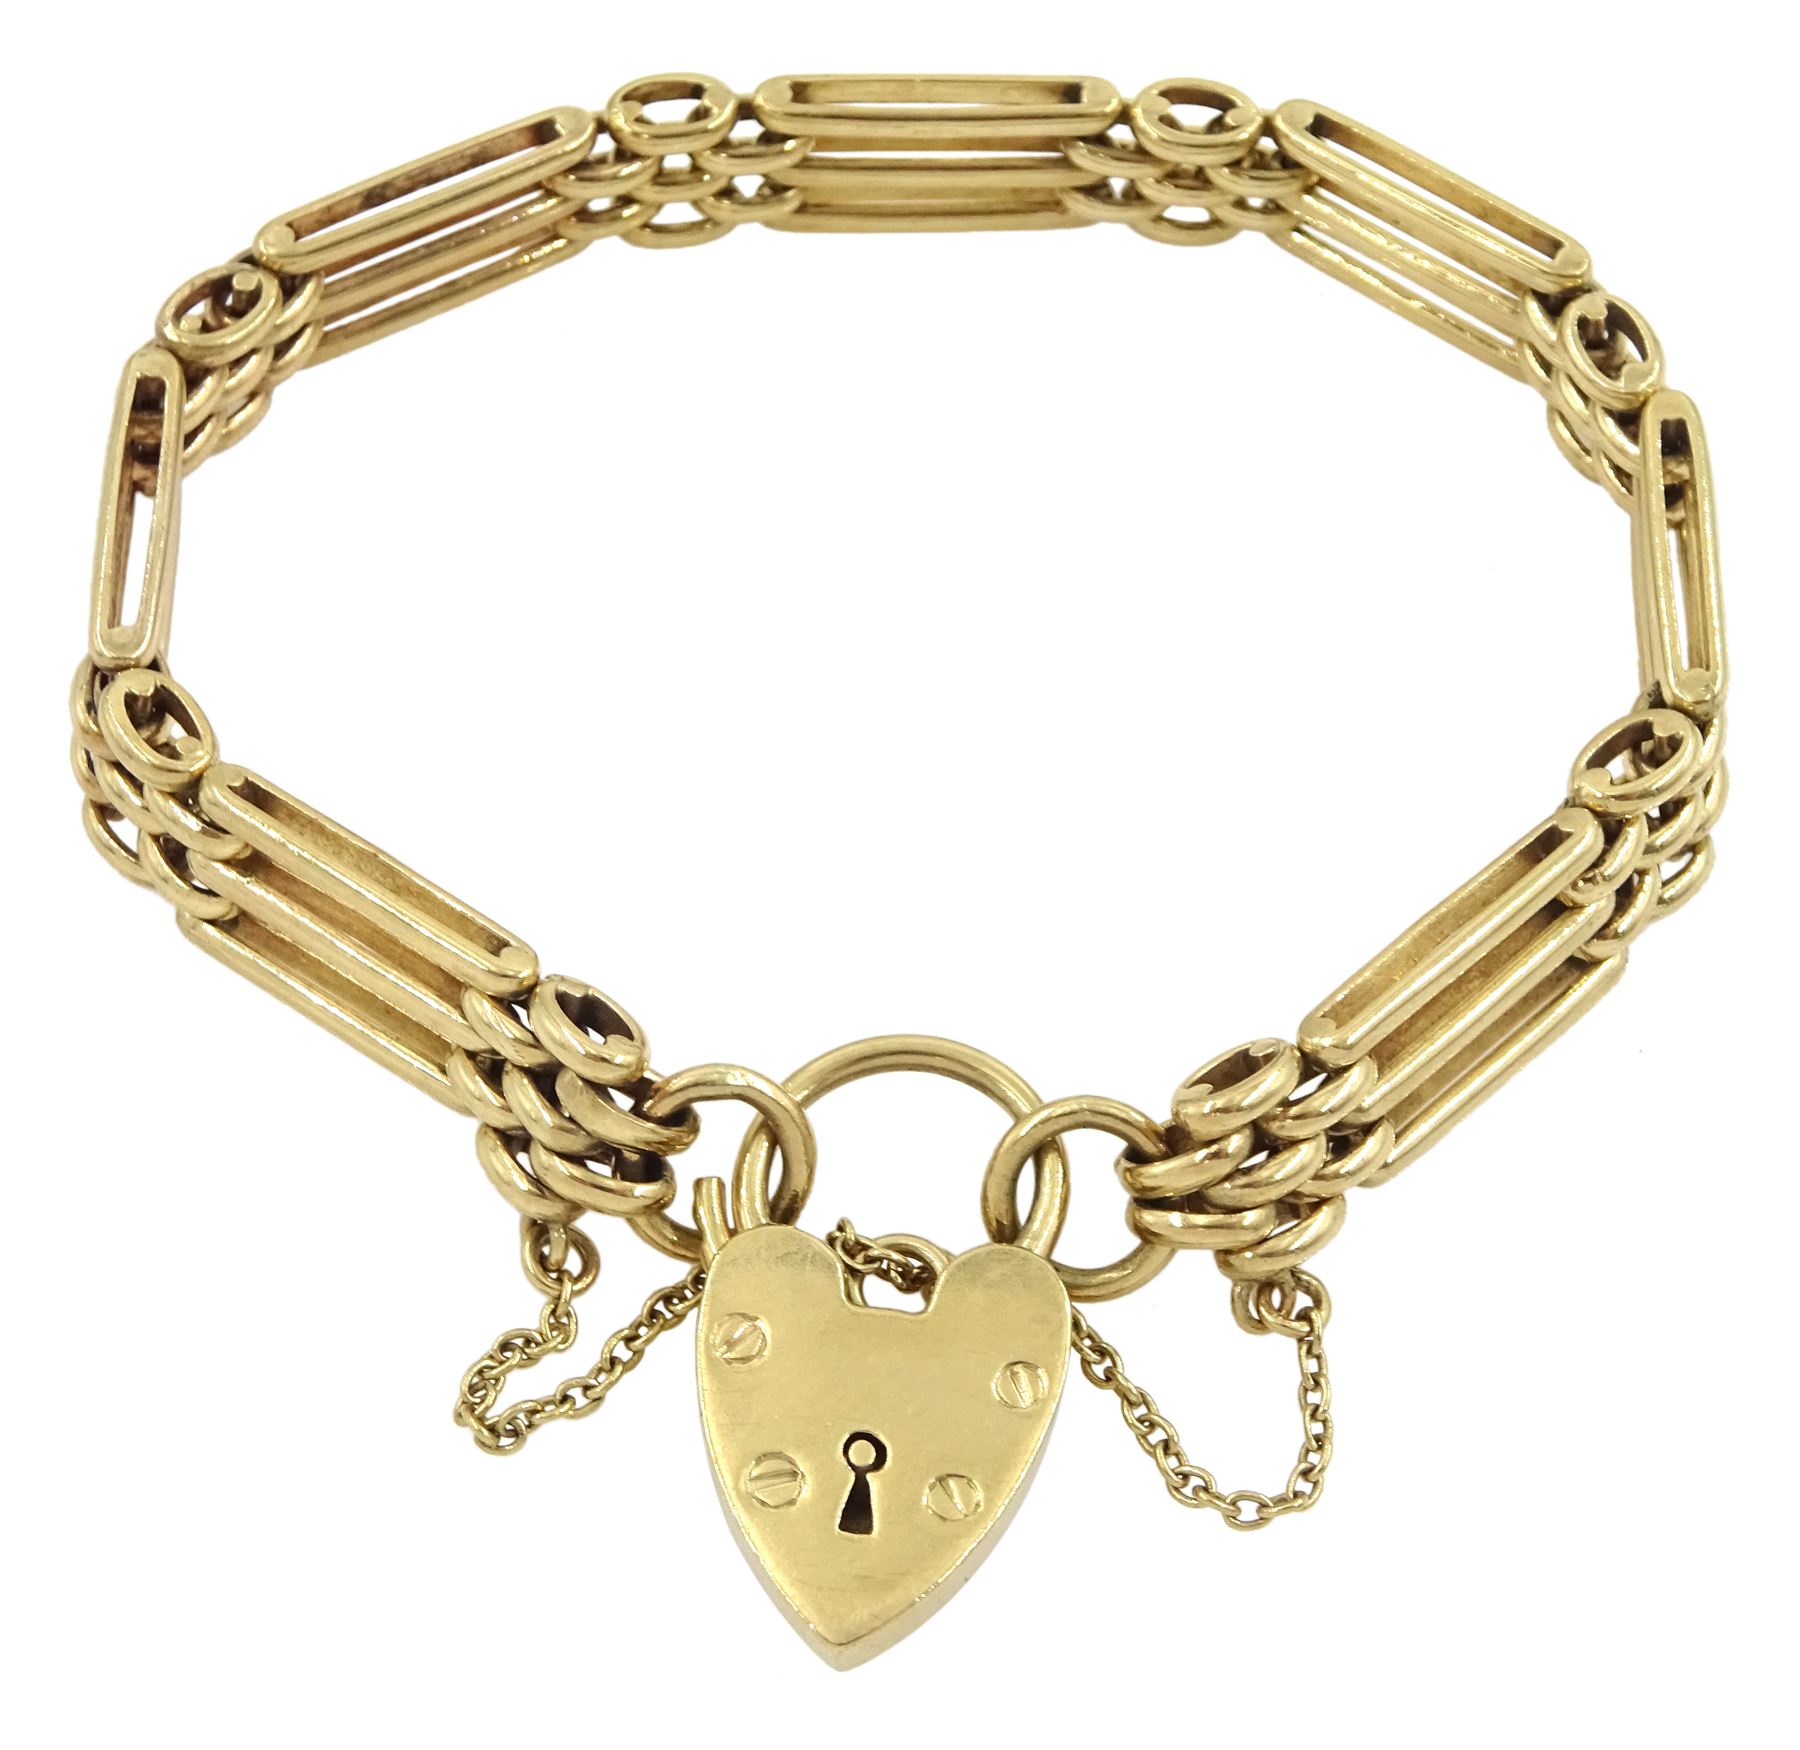 9ct gold three bar gate link bracelet with heart padlock clasp by Cropp & Farr Ltd